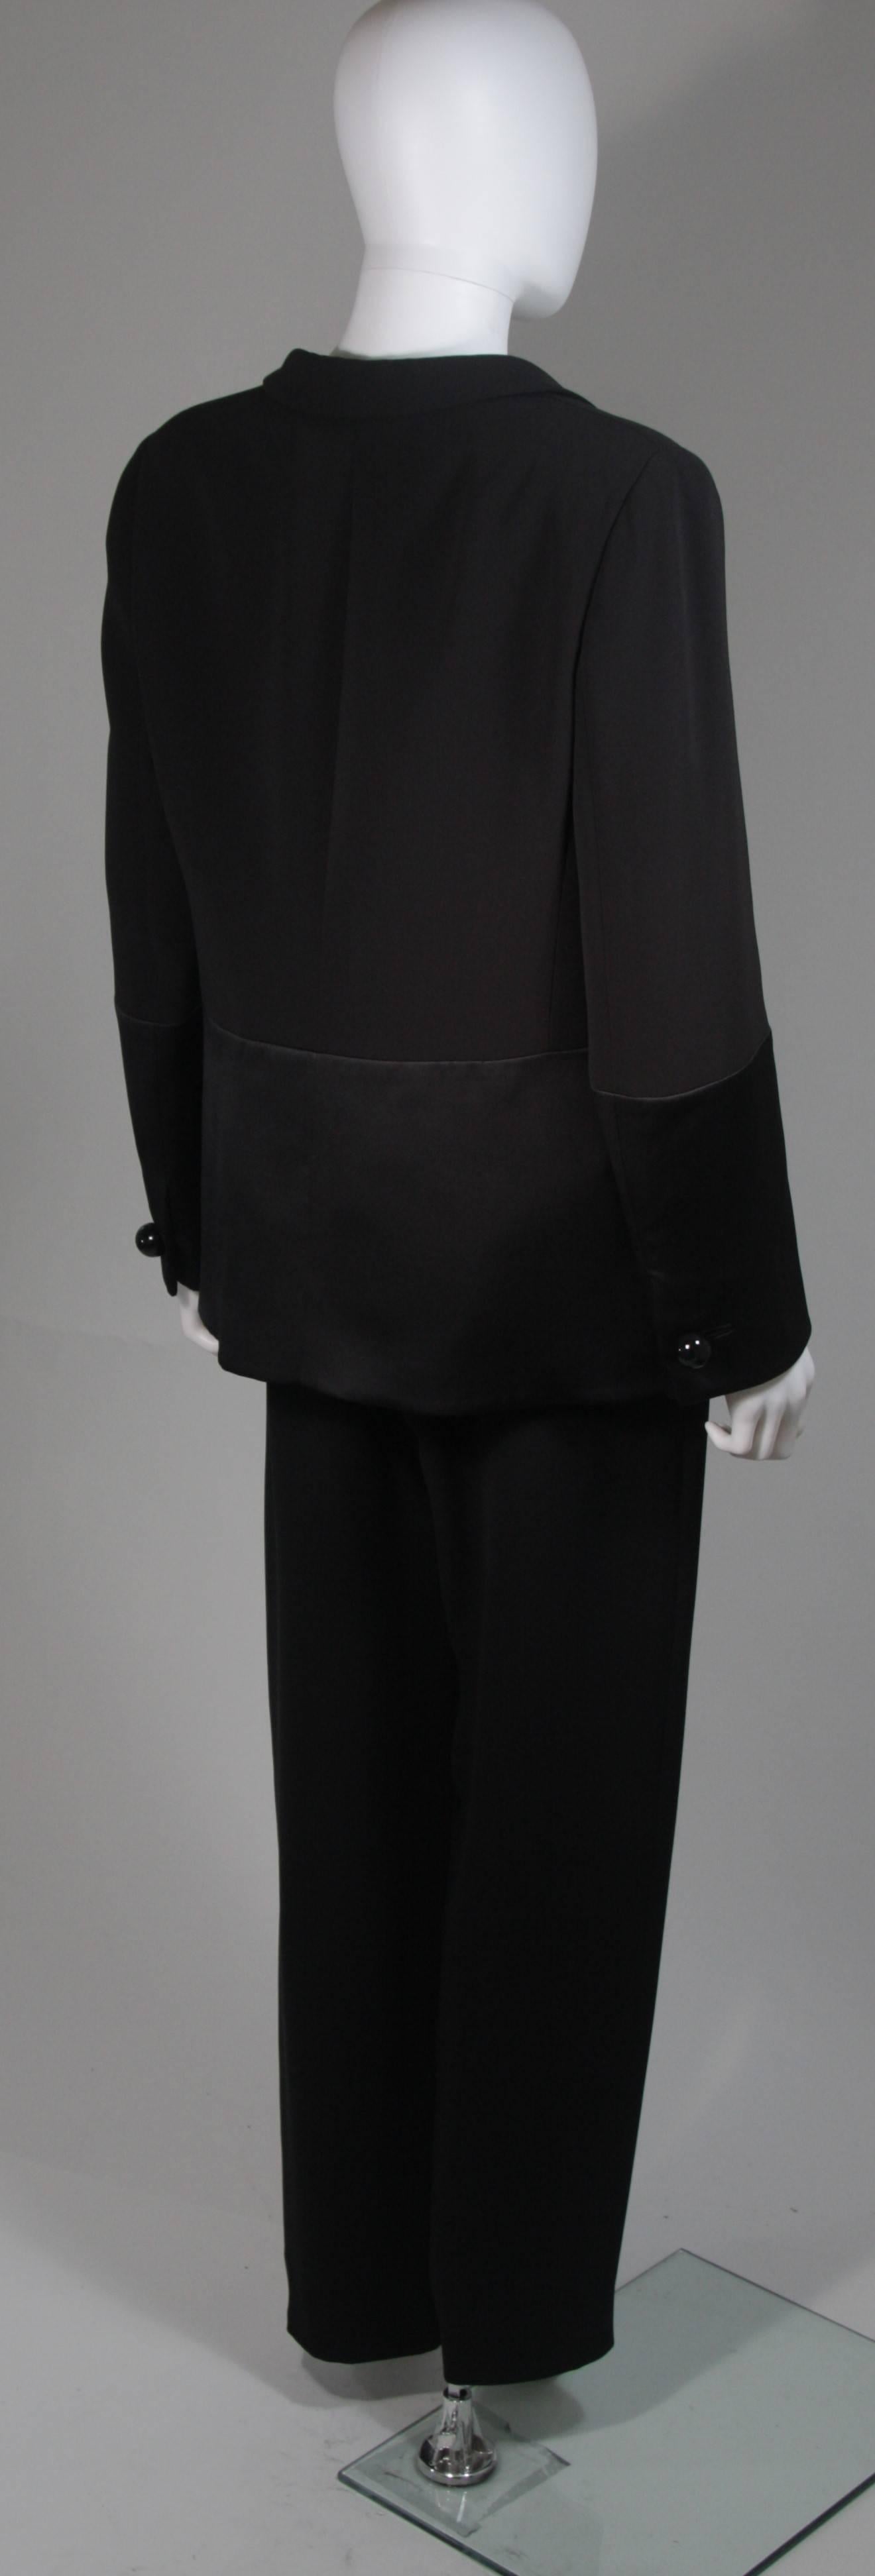 Women's Giorgio Armani Tuxedo Style Black Silk Pant Suit with Satin Accent Size Large